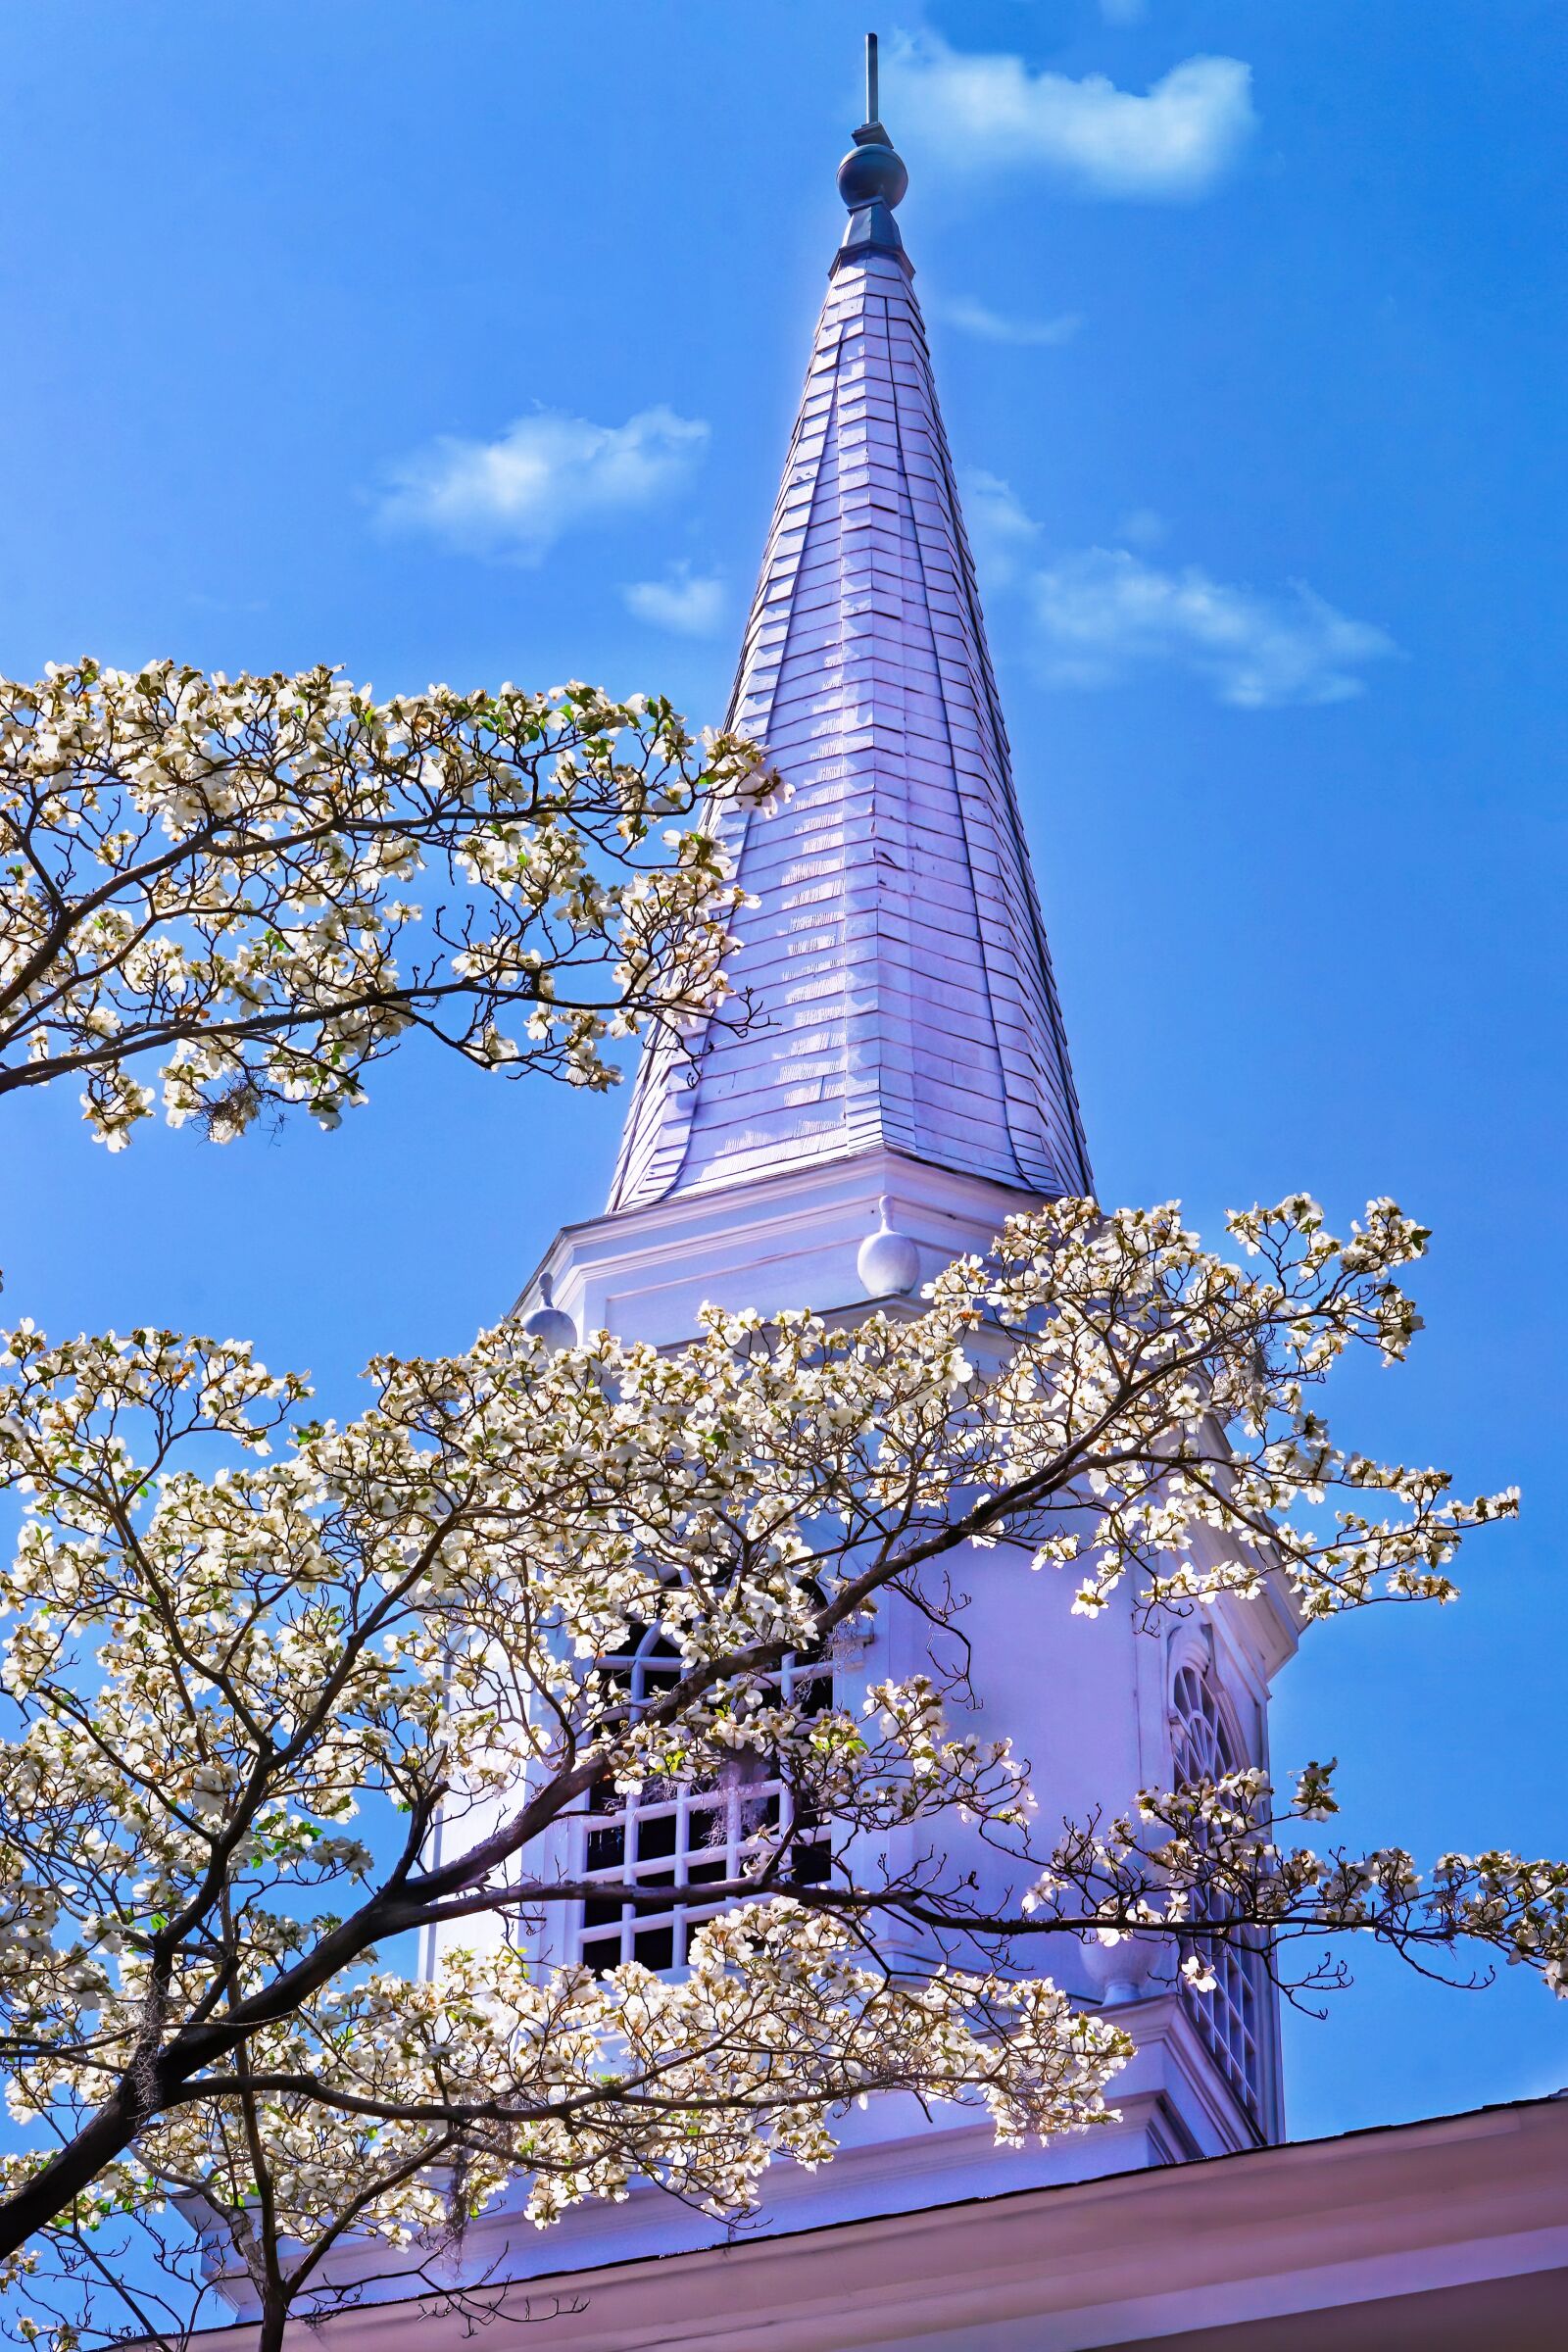 Sony a6300 sample photo. Church, steeple, spire photography